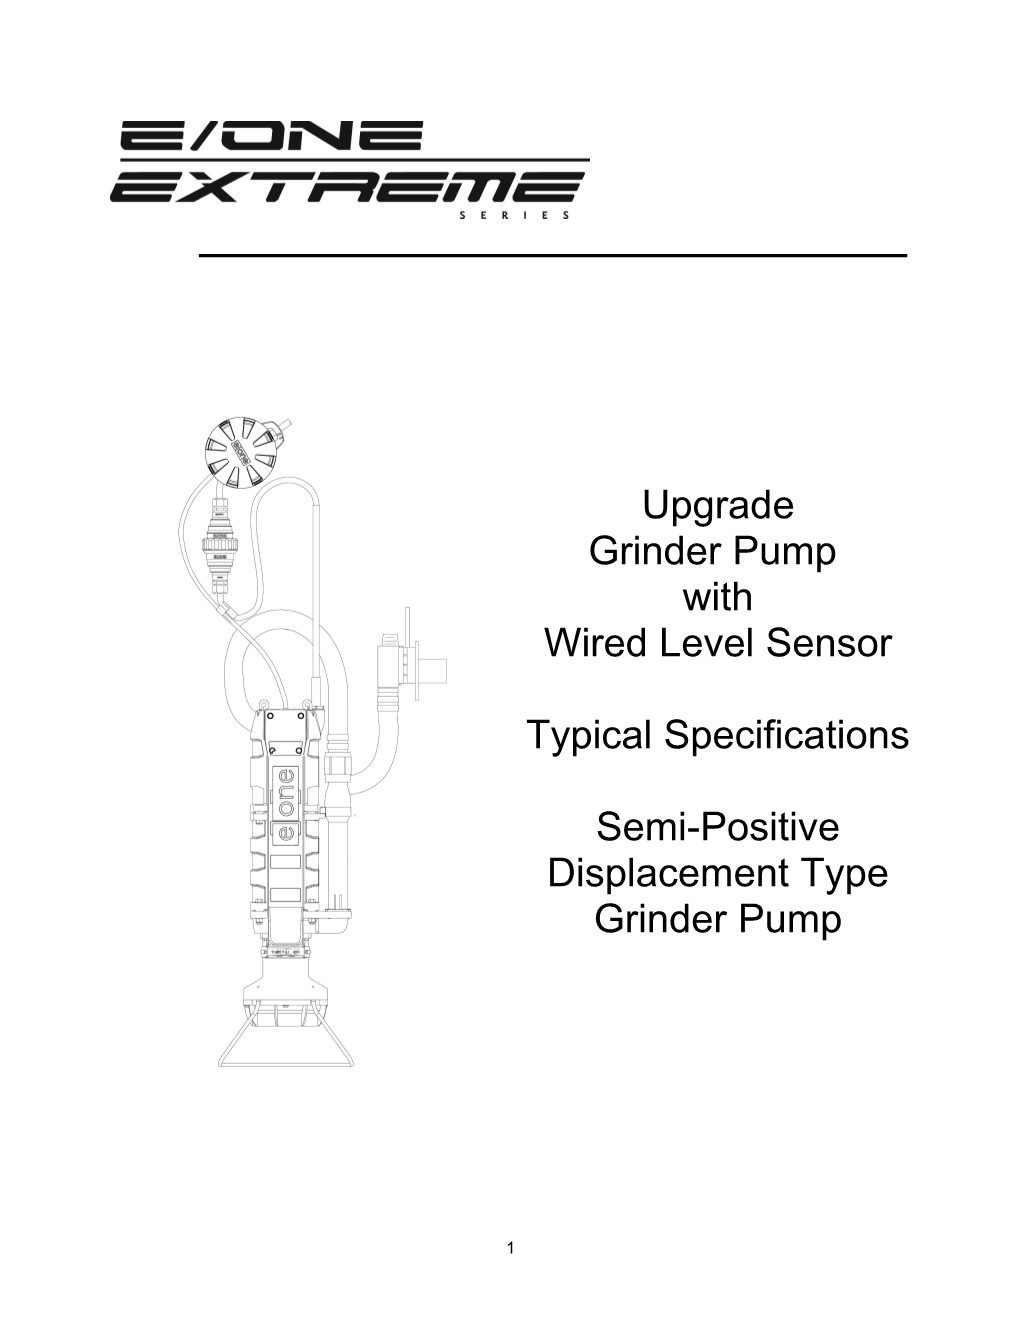 Section: Grinder Pump Units